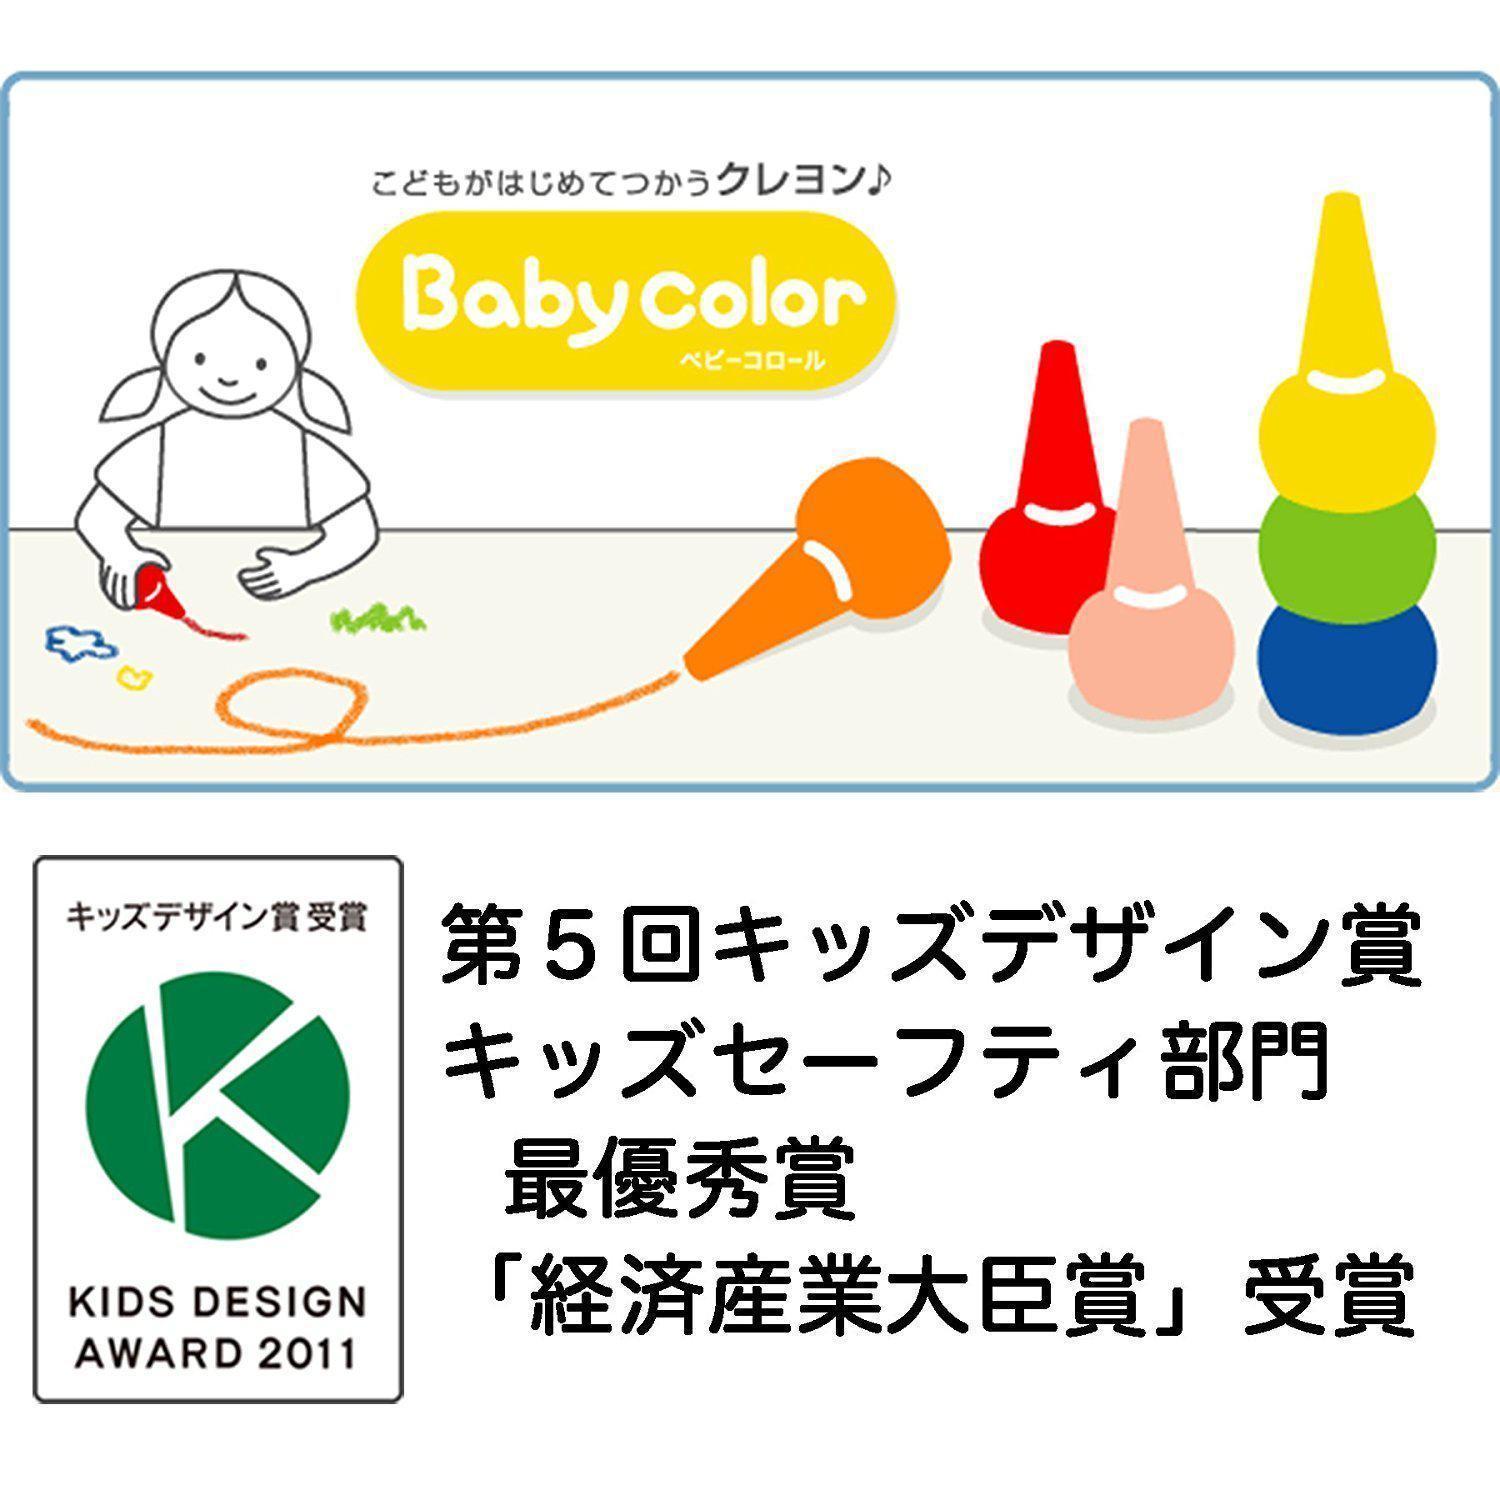 Rangs Japan Baby Color Crayons Sweet 6 Colors